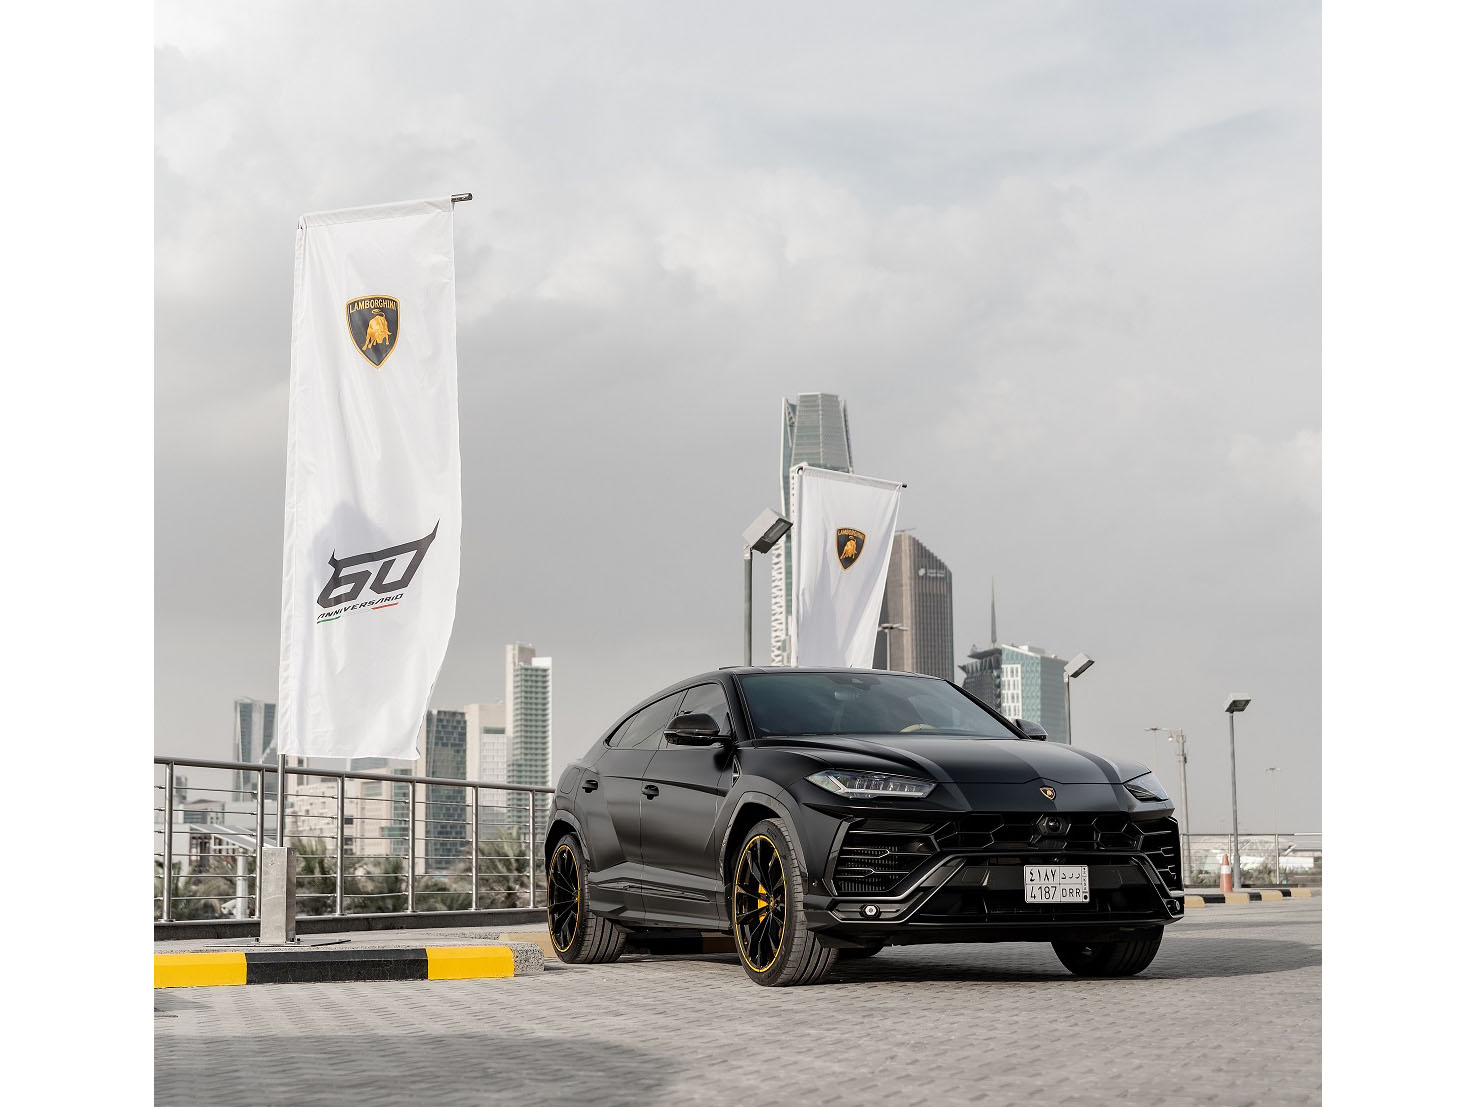 Lamborghini's 60th anniversary celebrated in Saudi Arabia